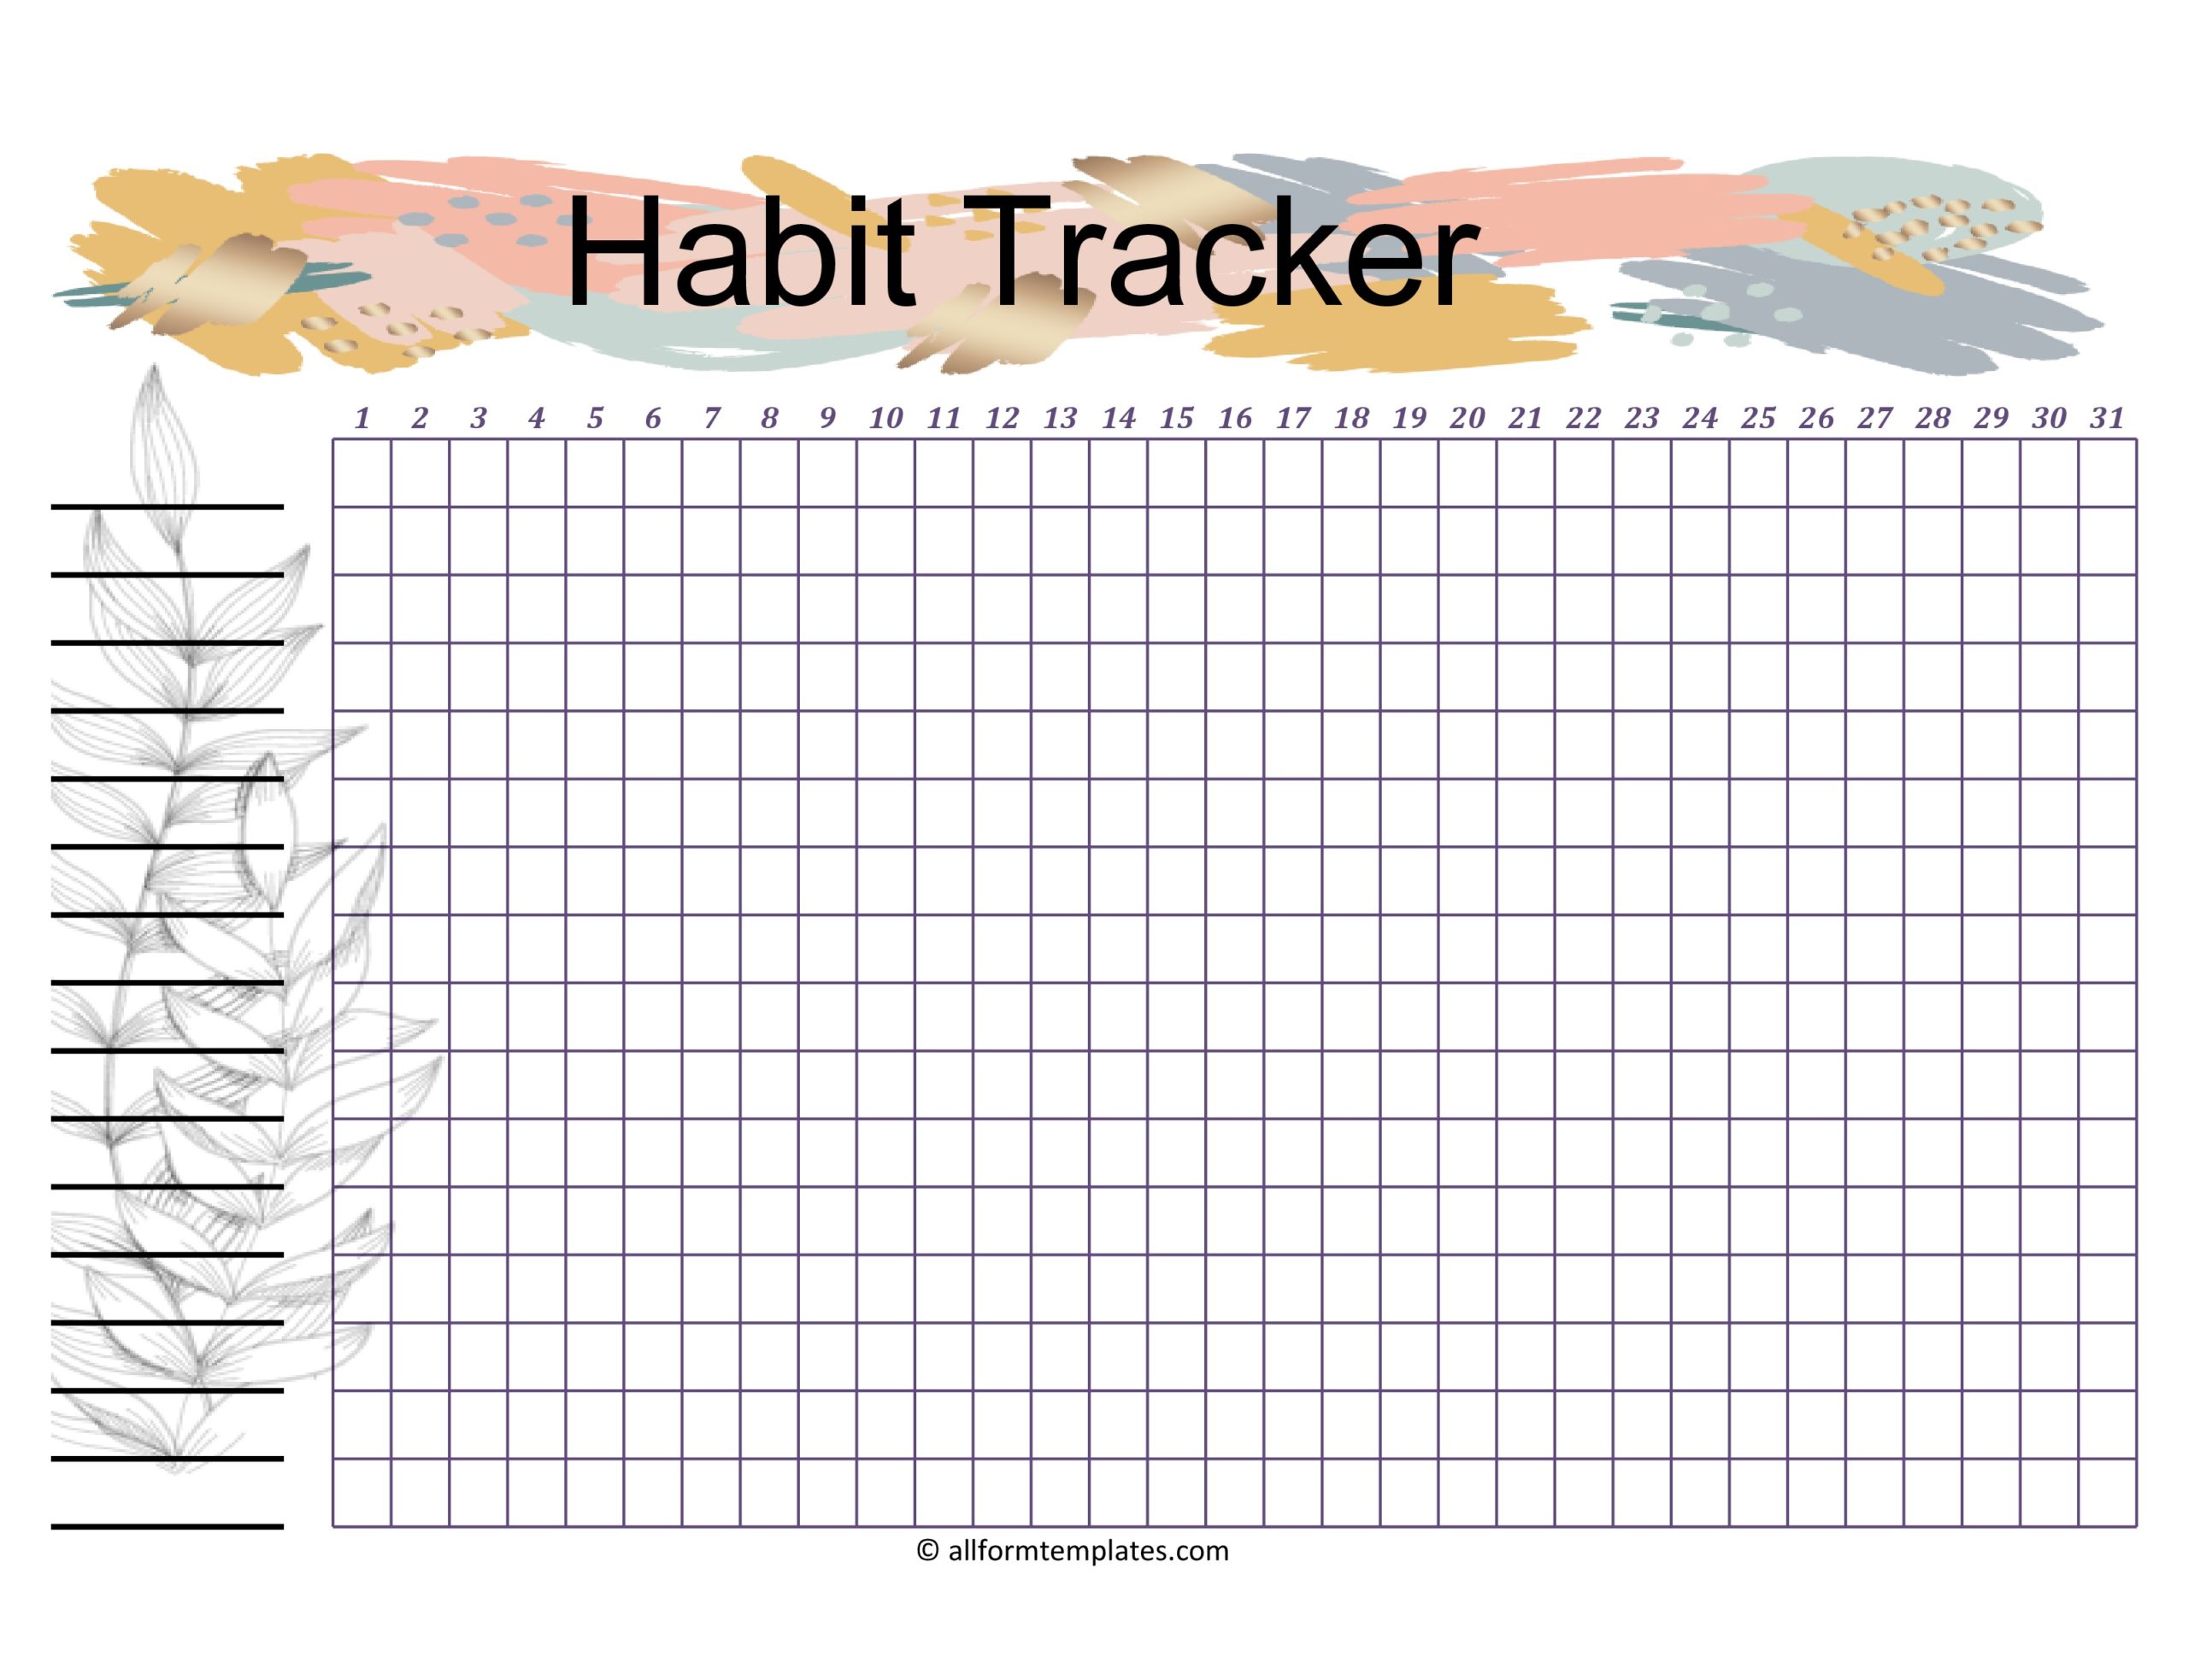 Free habit tracker template 06